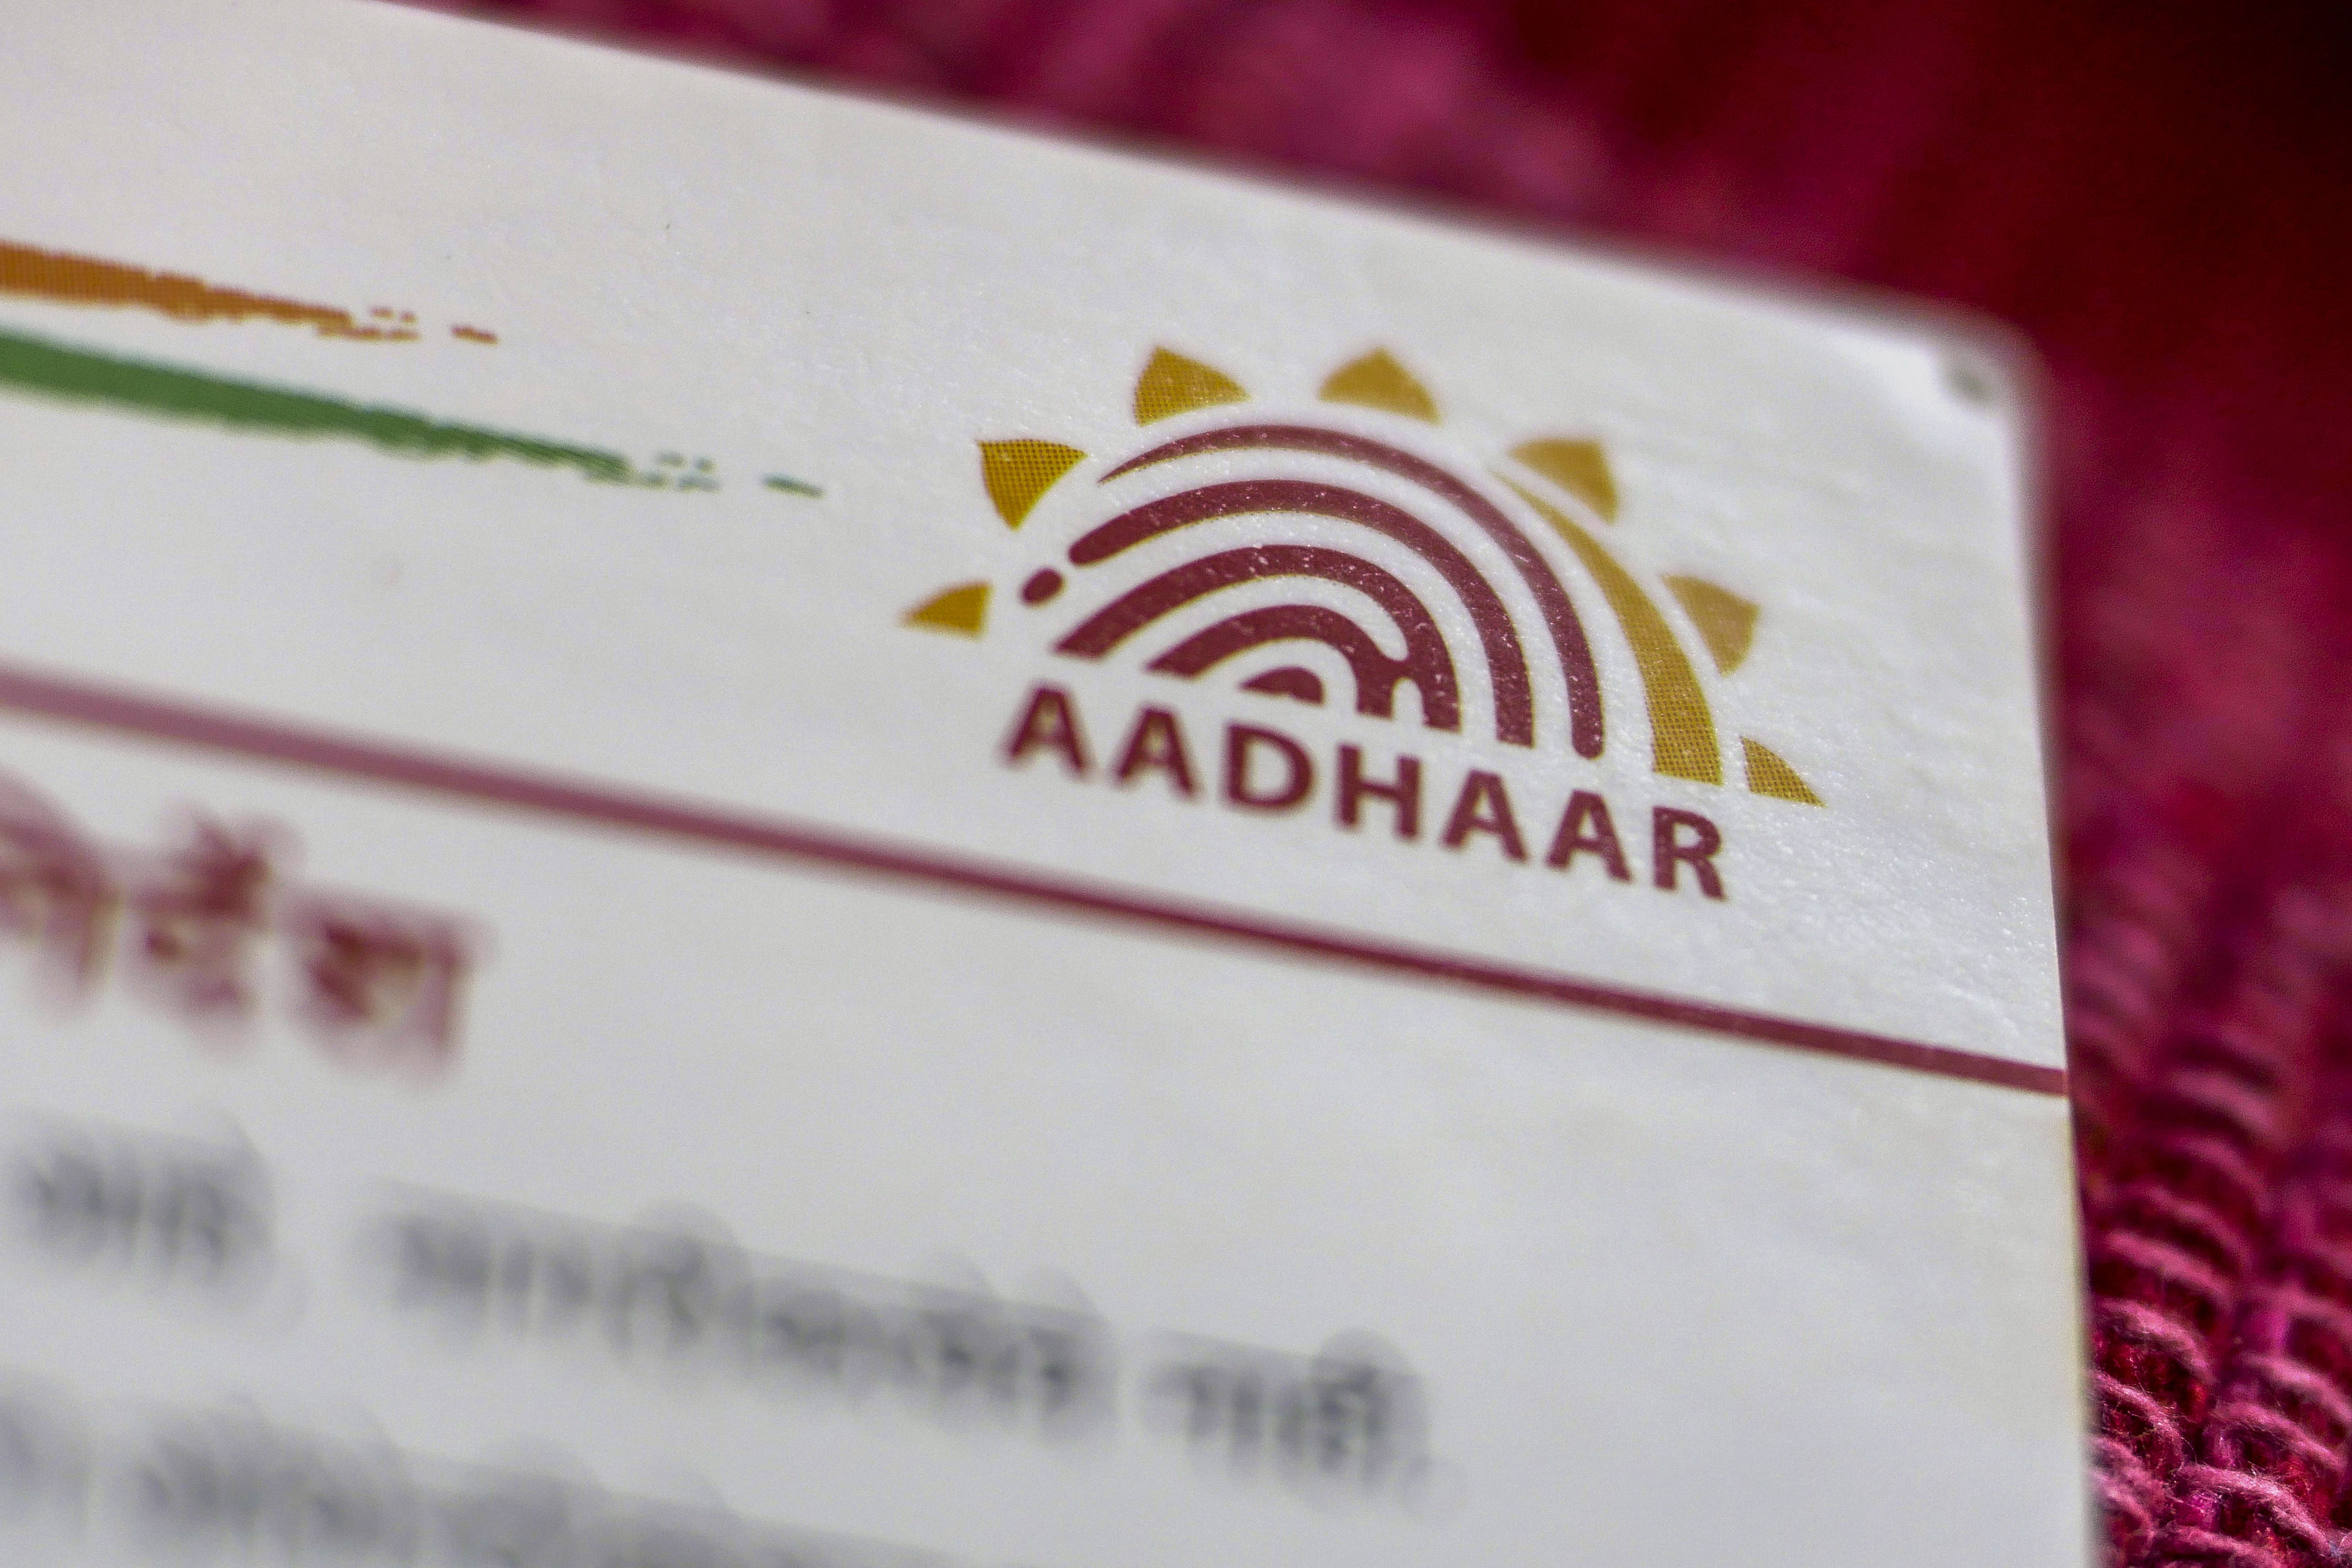 Aadhar Card Logo: Step By Step Guide with Images [Complete] - Aadhaar Card